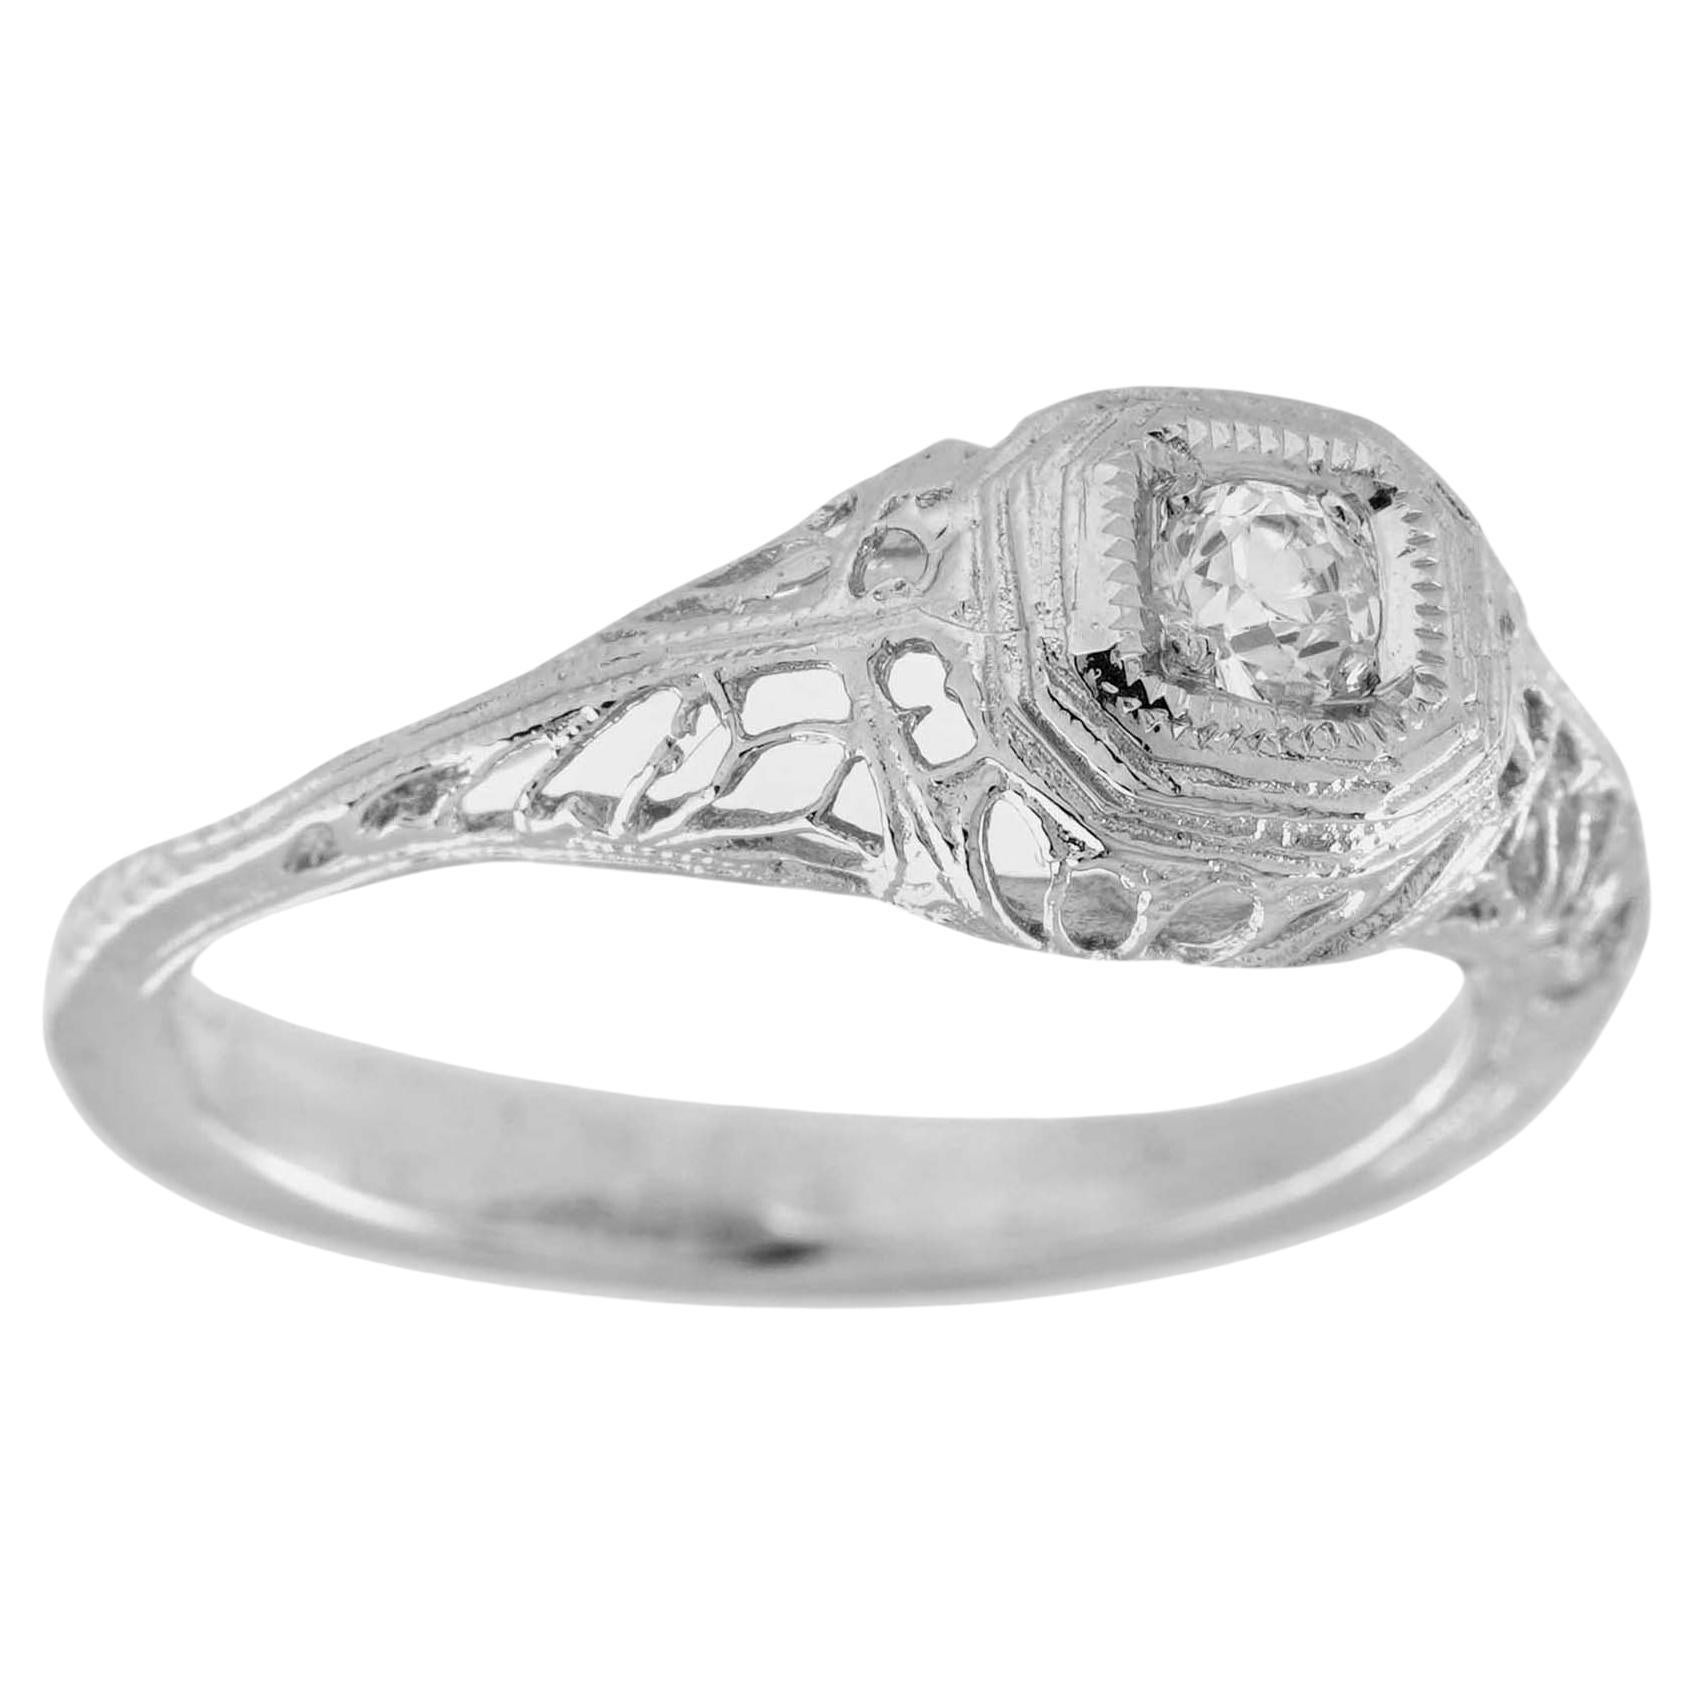 Natural Diamond Vintage Style Filigree Engagement Ring in 9K White Gold